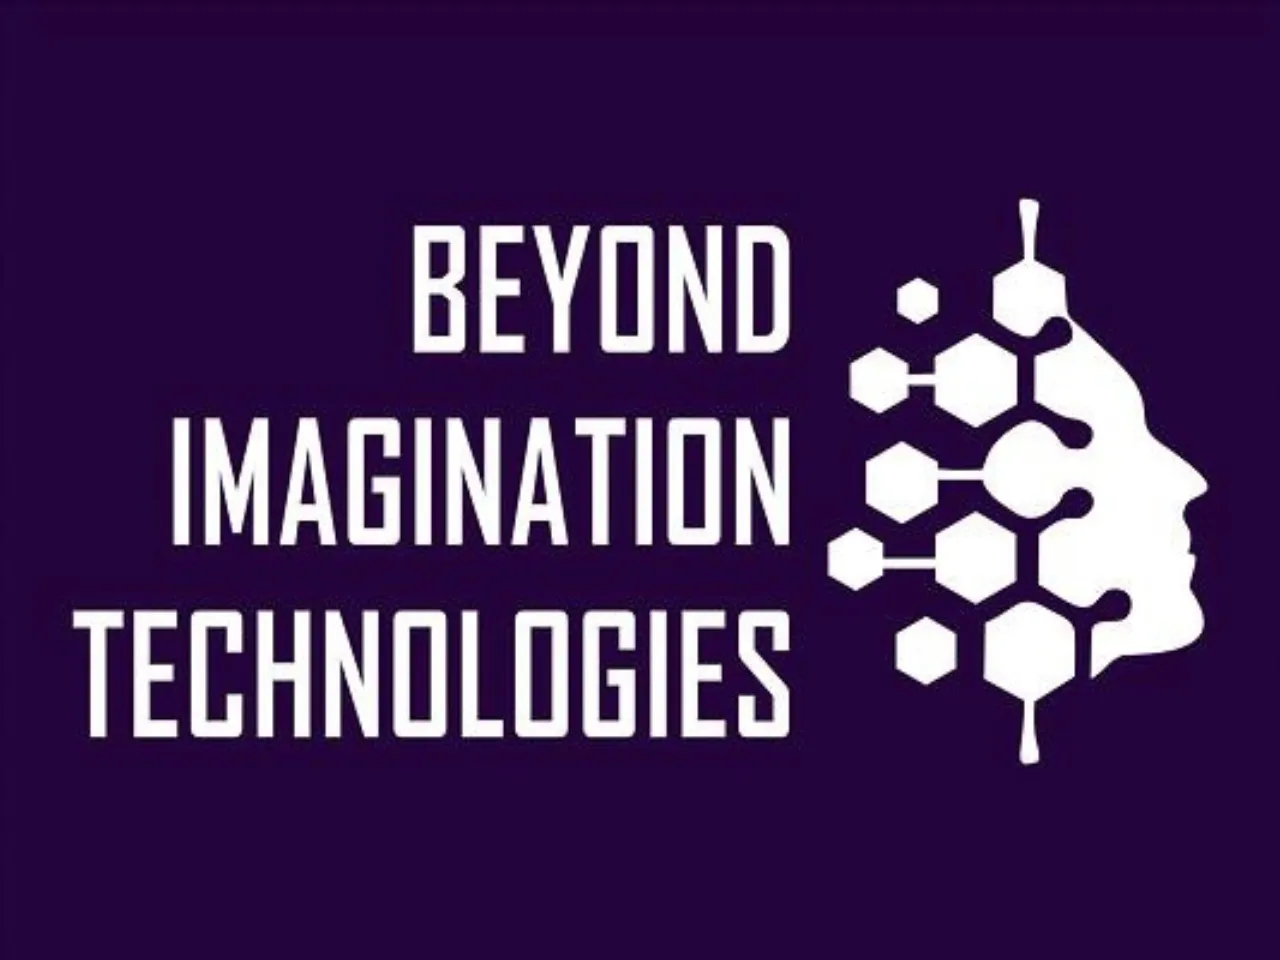 Beyond Imagination Technologies